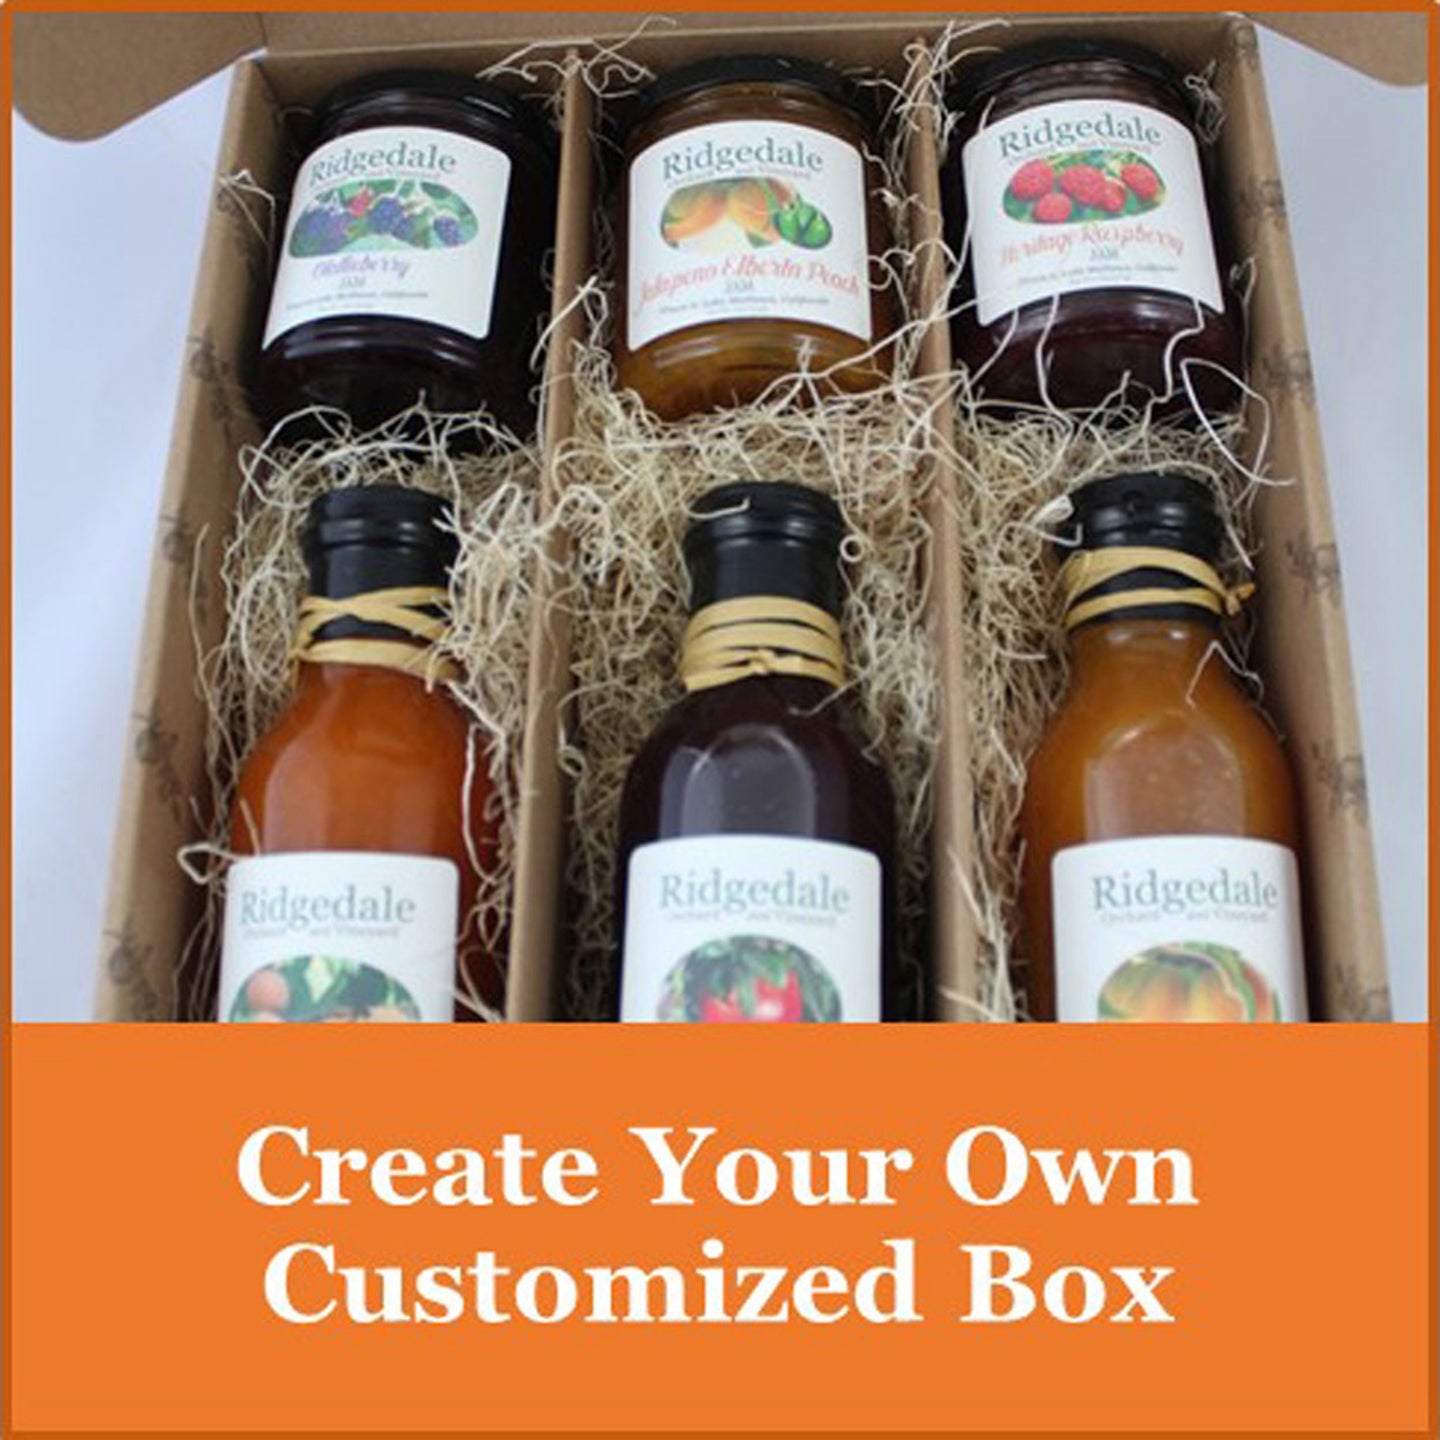 Custom Assortments & Gifts - Ridgedale Orchard & Vineyard